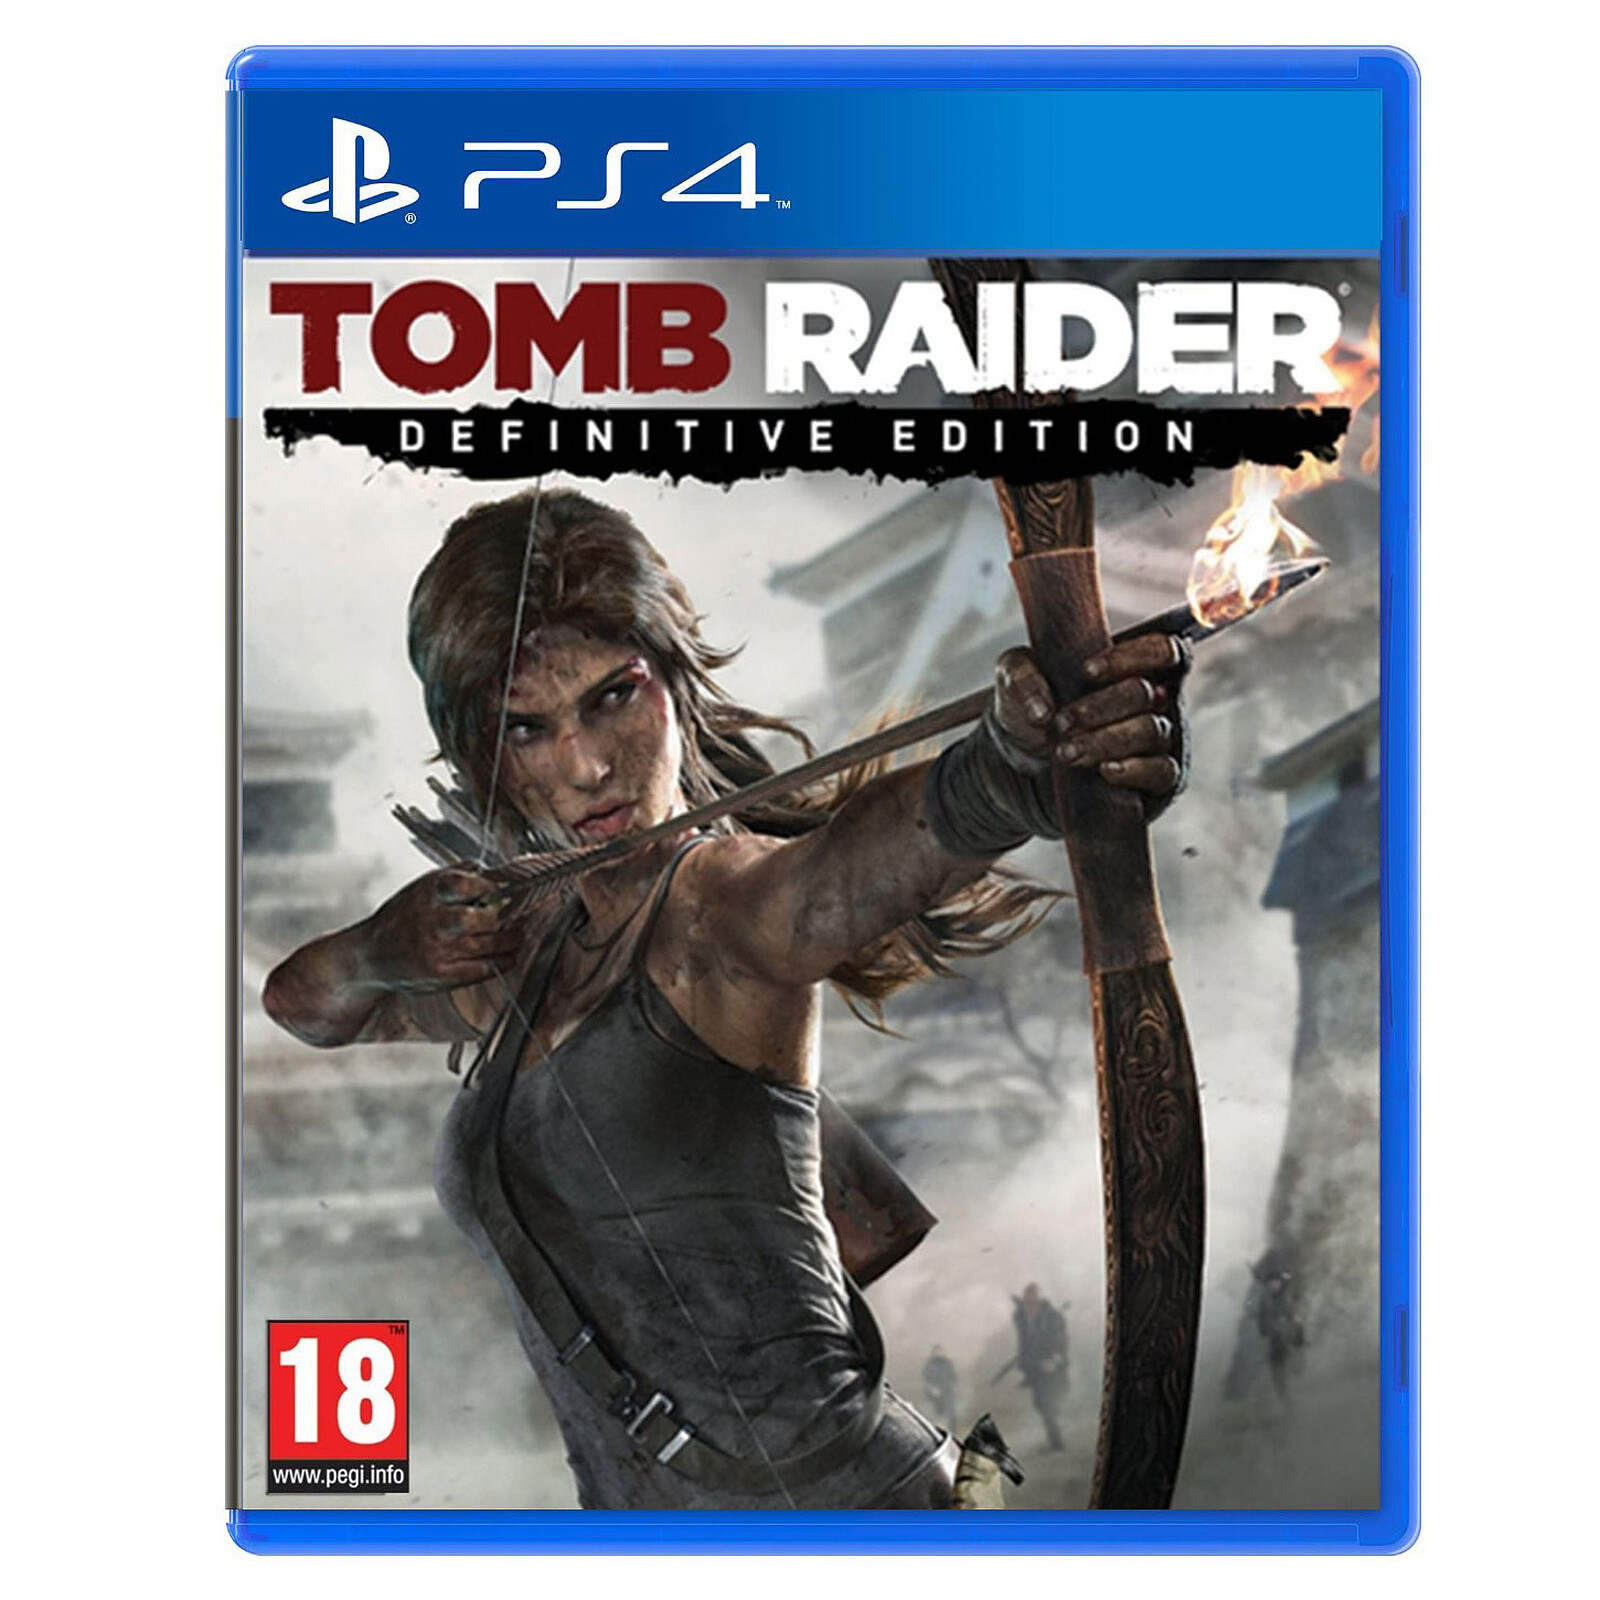 Ps4 игры 7. Tomb Raider Definitive Edition. Томб Райдер пс4. Томб Райдер диск ПС 4.